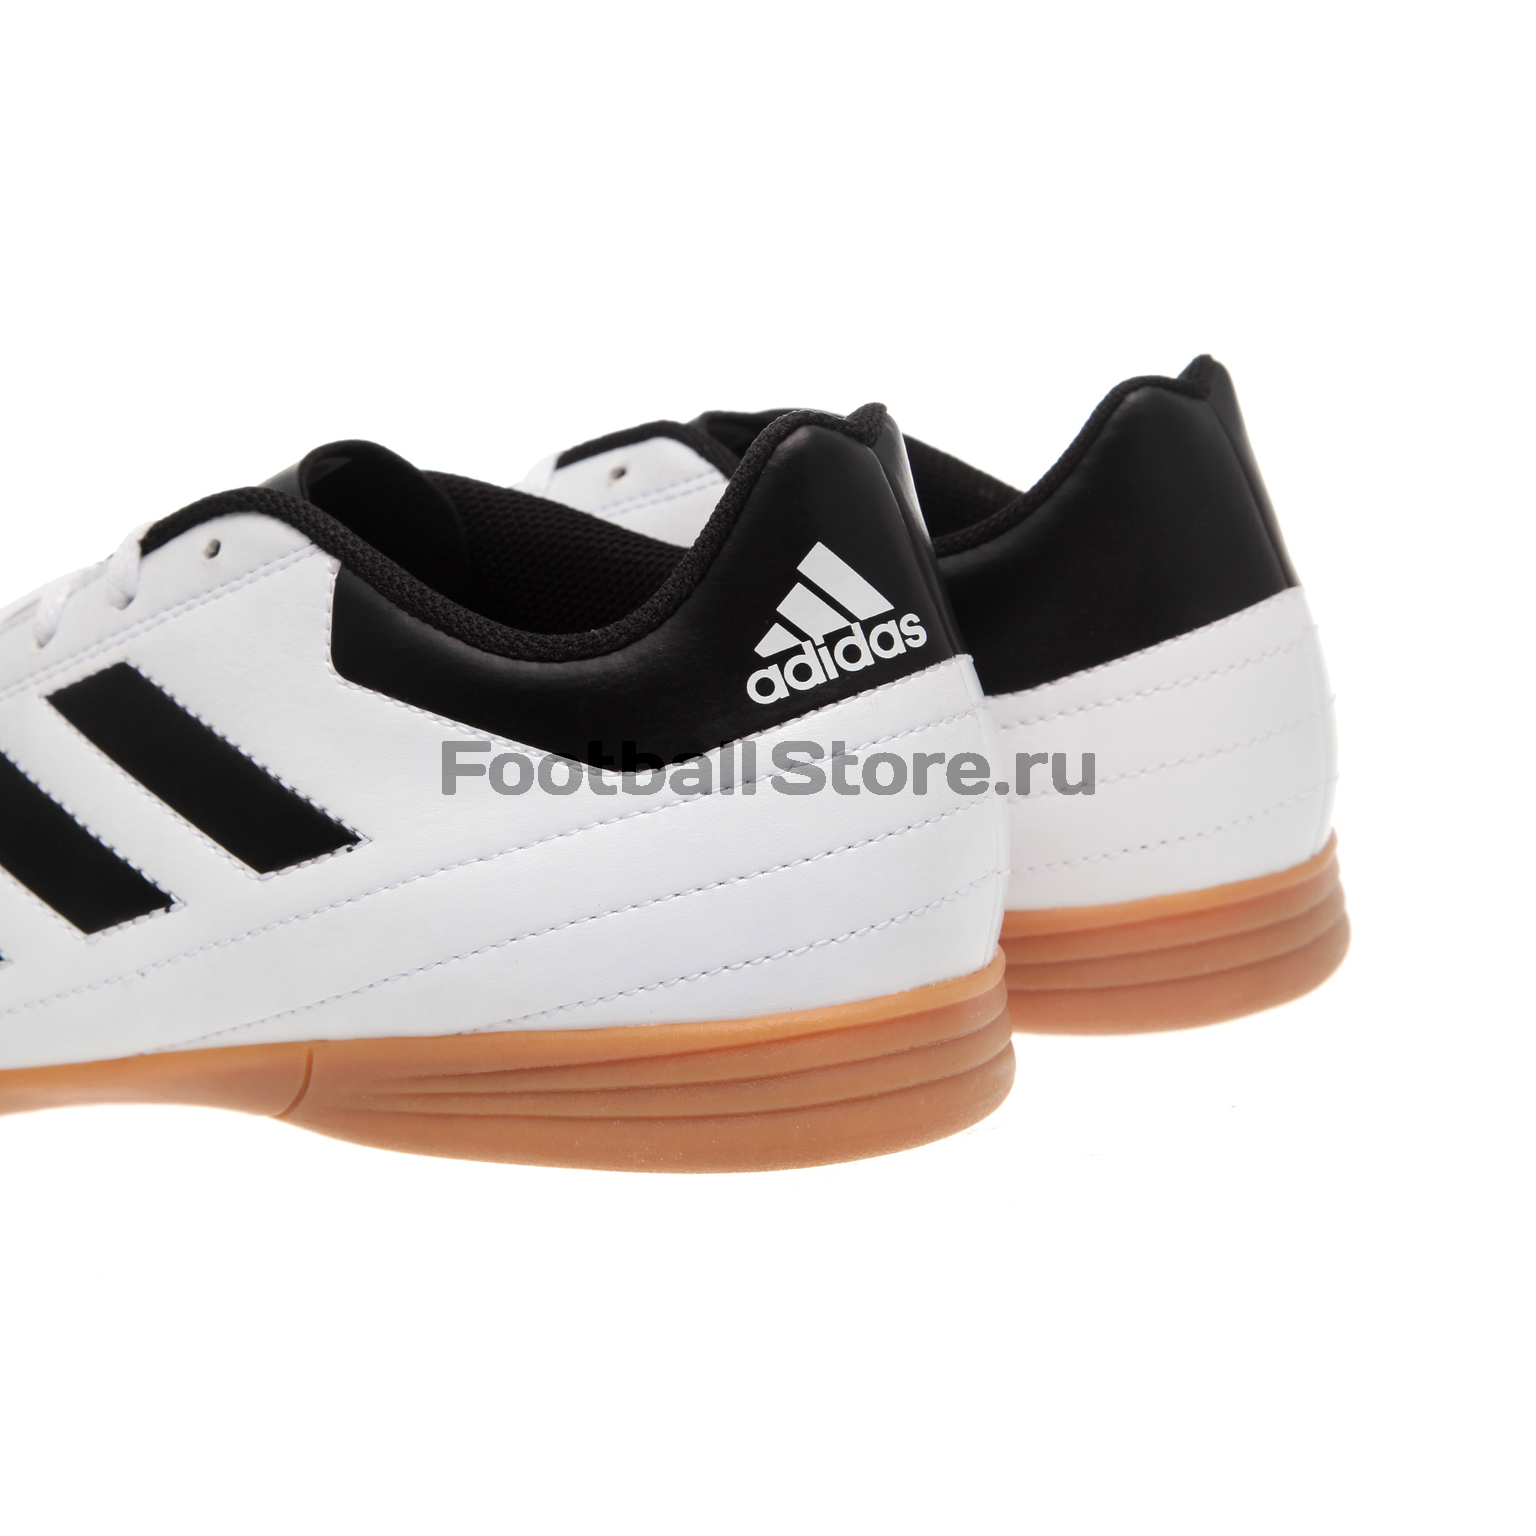 Обувь для зала Adidas Goletto VI IN AQ4292